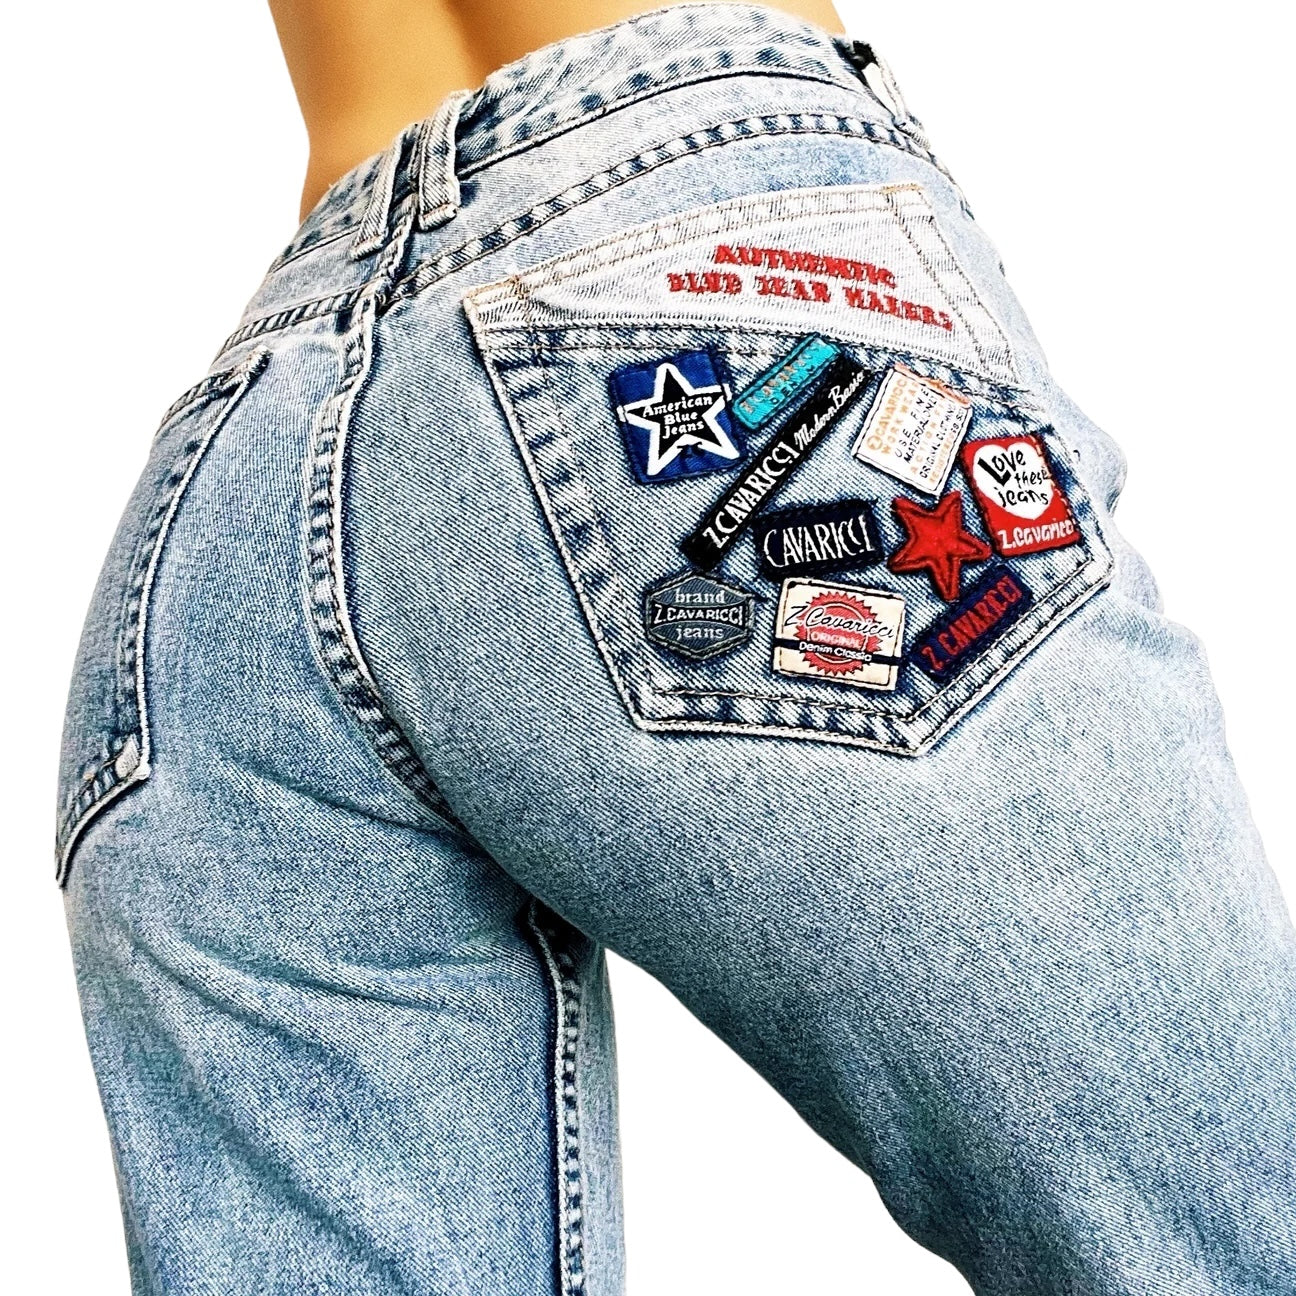 Vintage Patch Pocket Jeans (S)